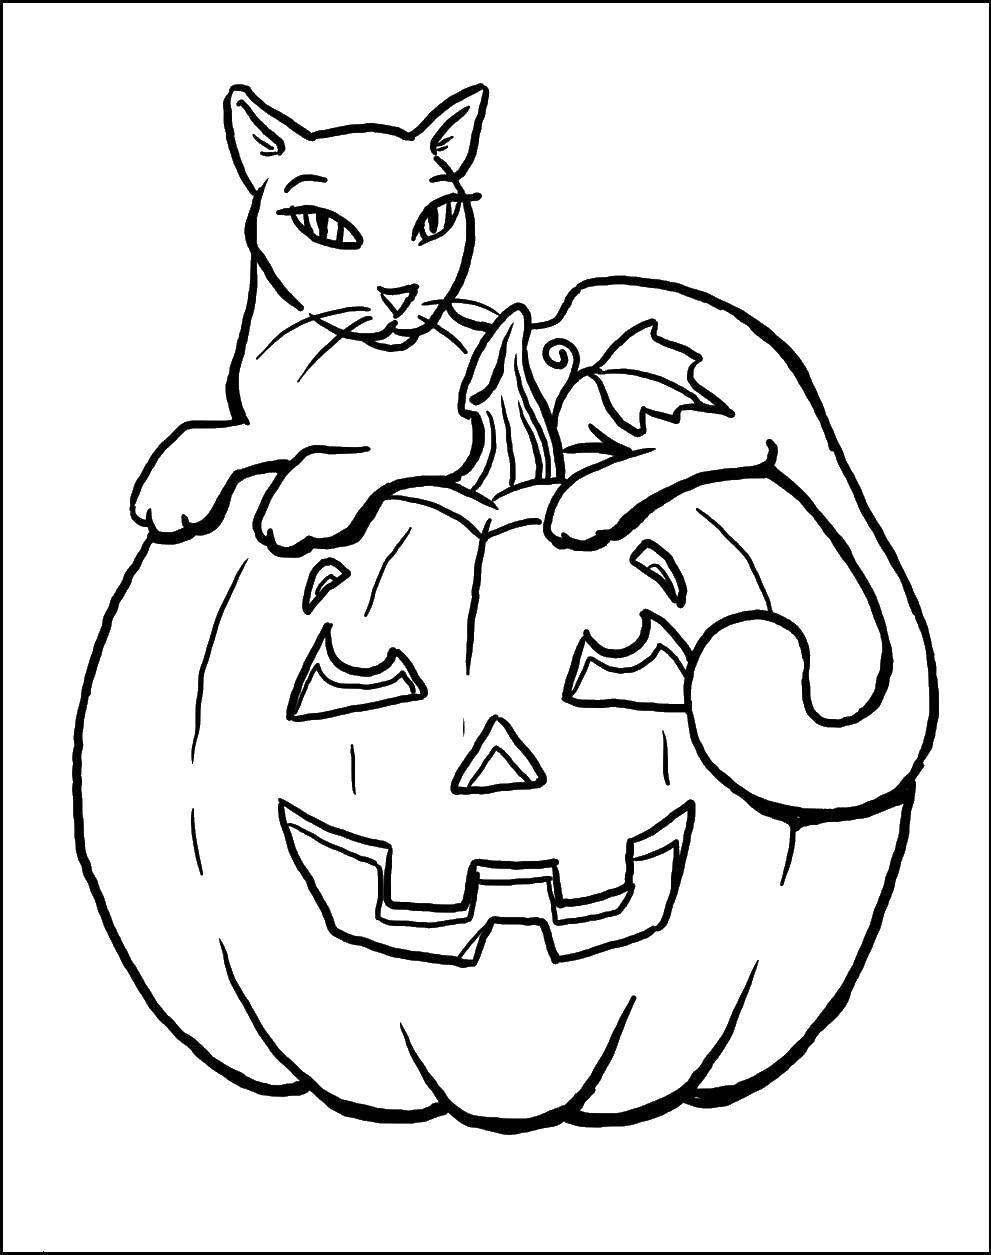 Coloring Cat on a pumpkin. Category Halloween. Tags:  Halloween, pumpkin, cat.